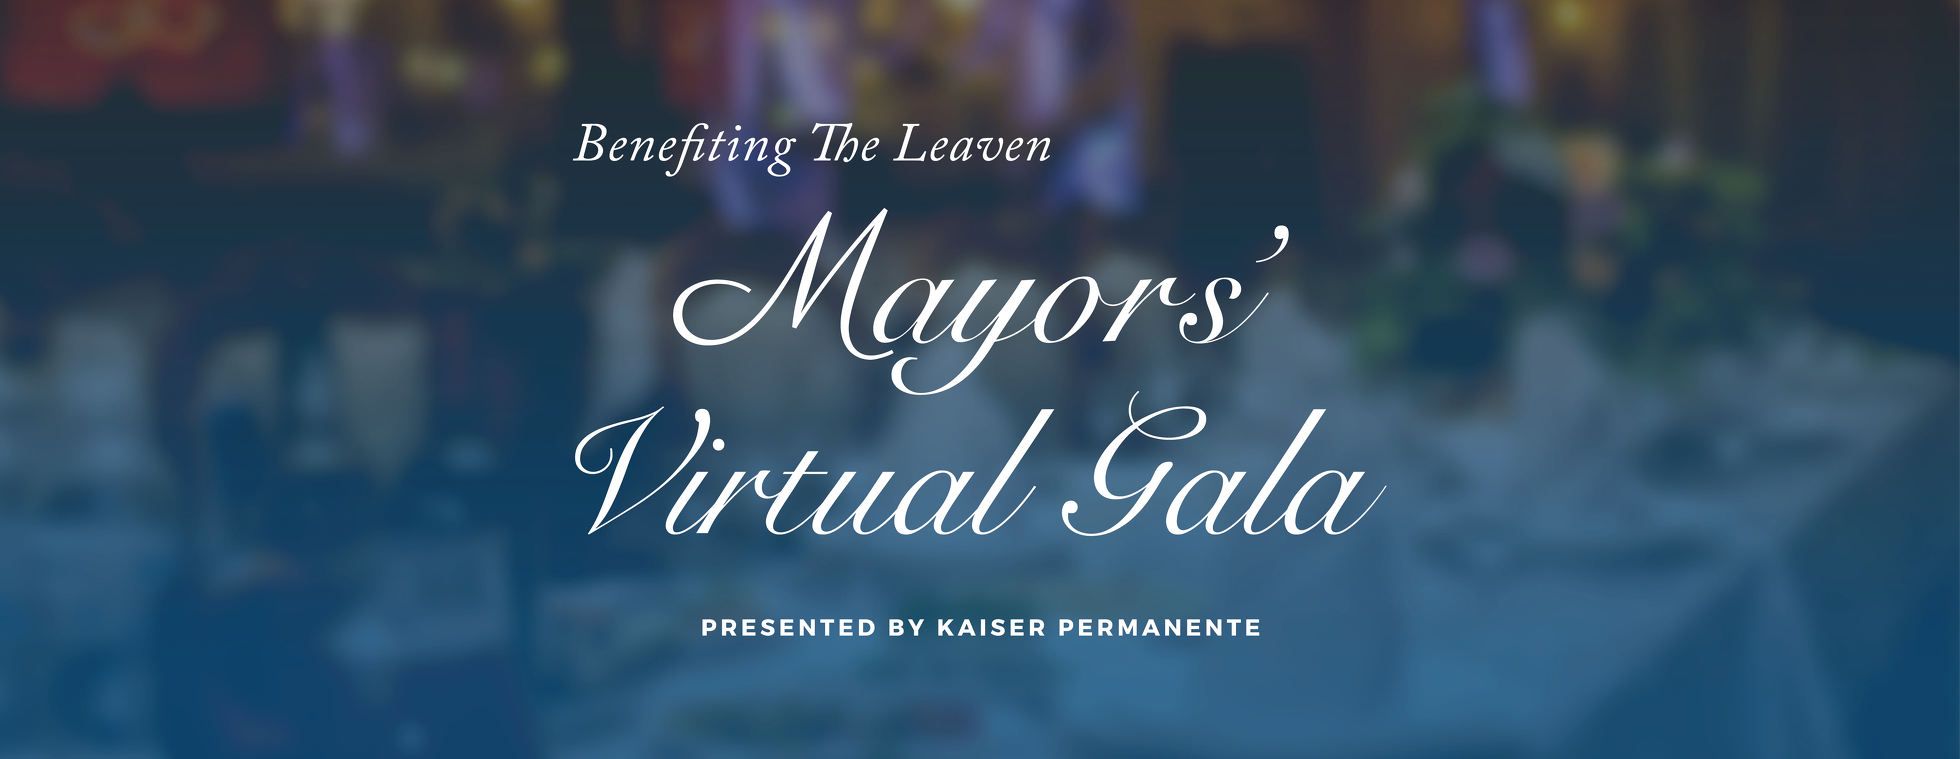 Mayors' Gala Benefiting The Leaven 2020